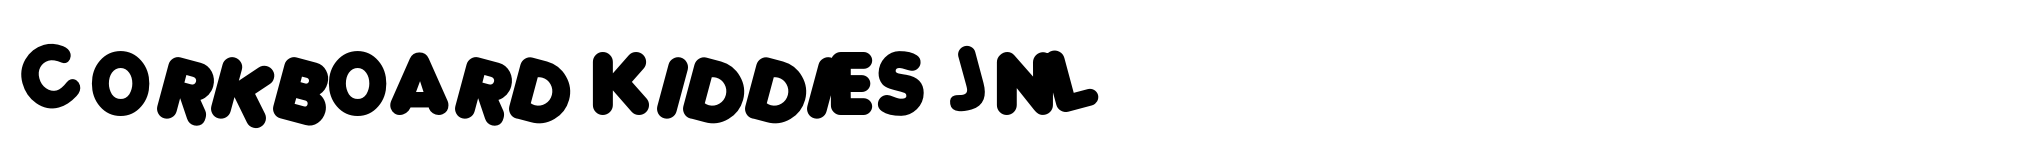 Corkboard Kiddies JNL image